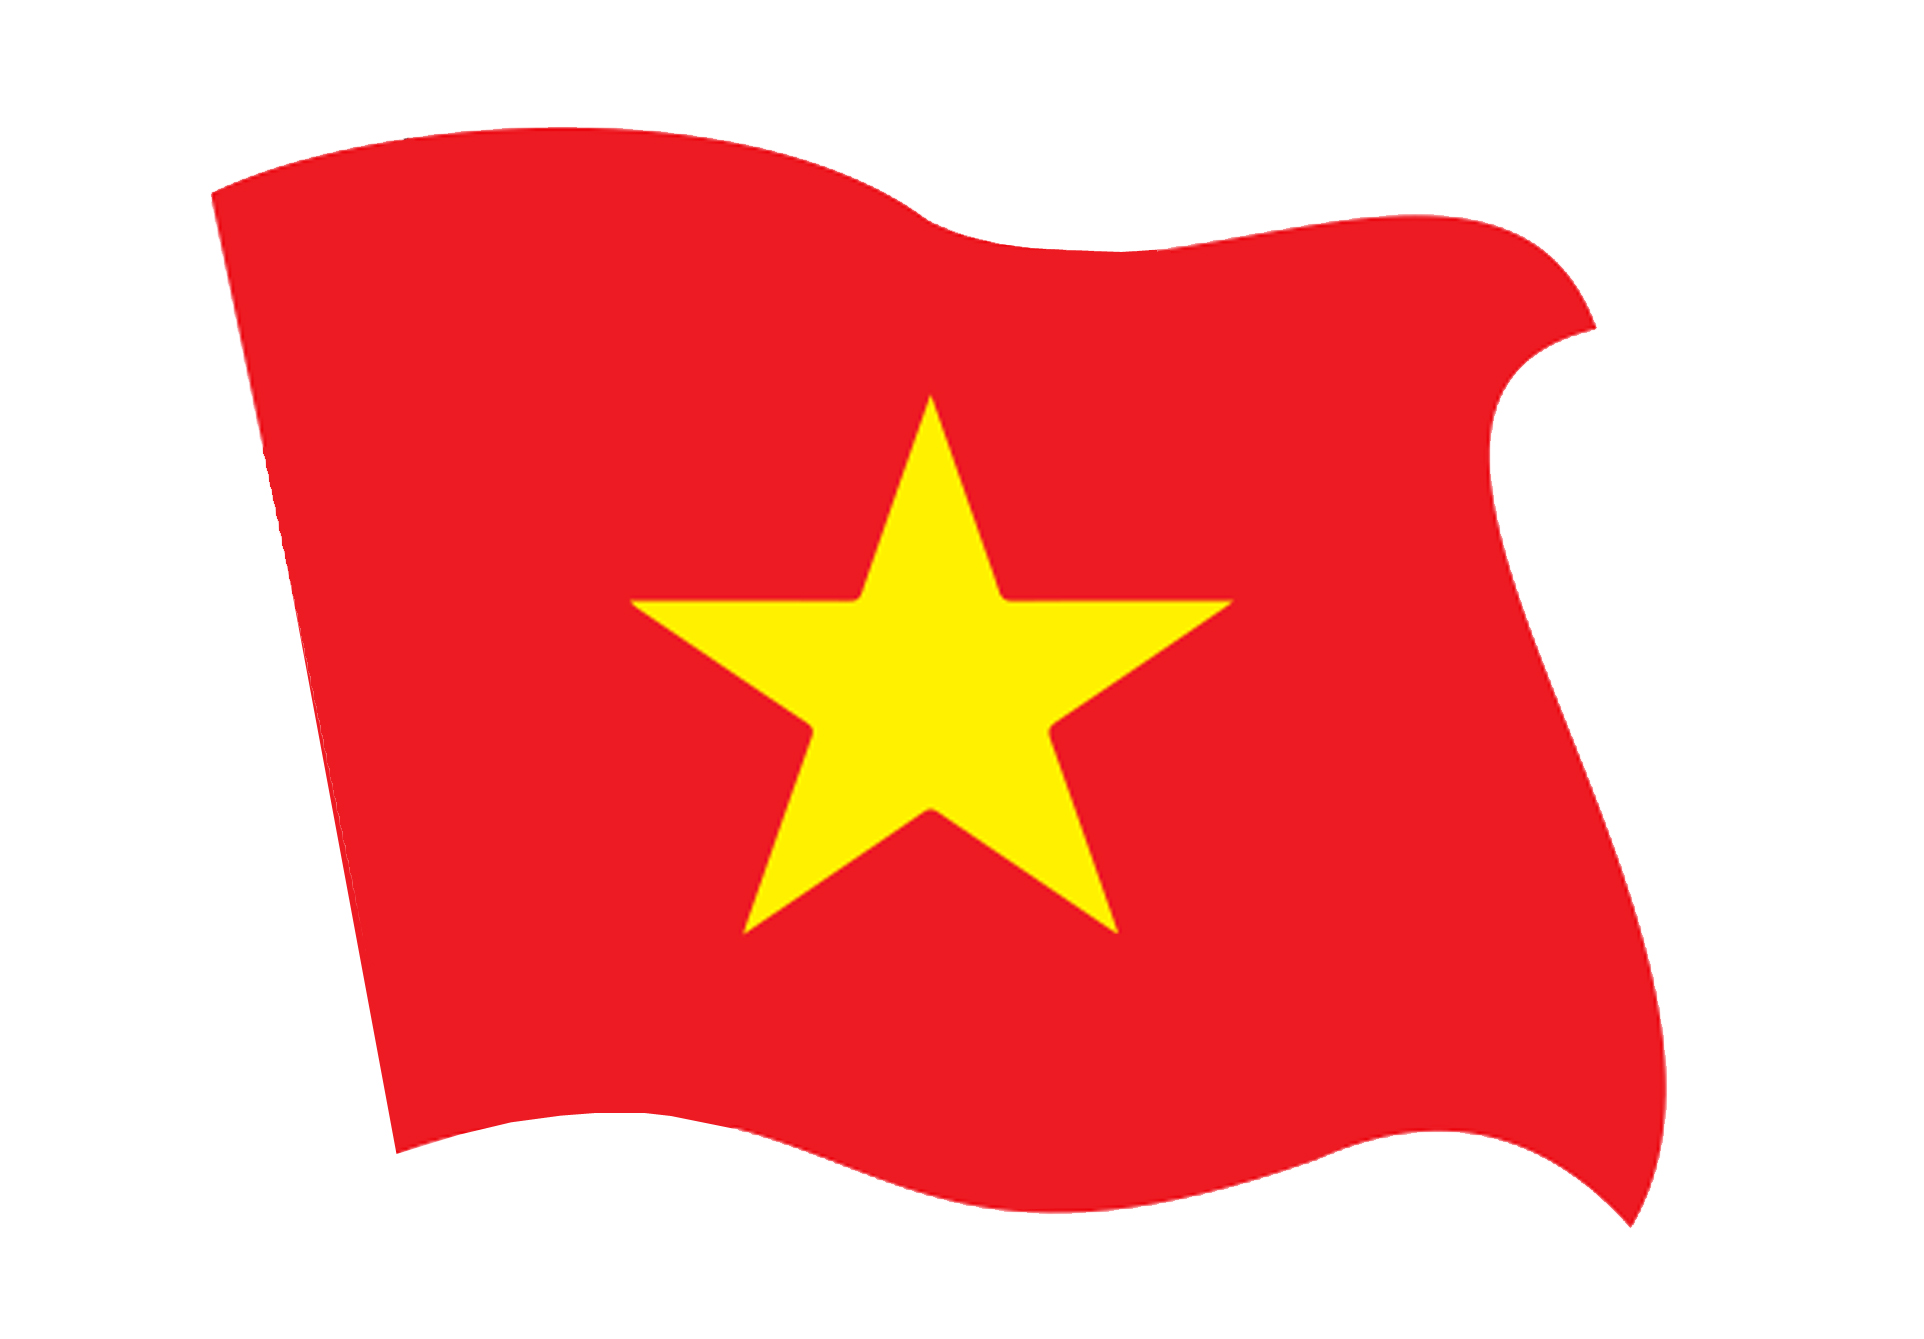 TEM DÁN LÁ CỜ VIỆT NAM 15CM | Lazada.vn hình dán lá cờ Việt Nam - \